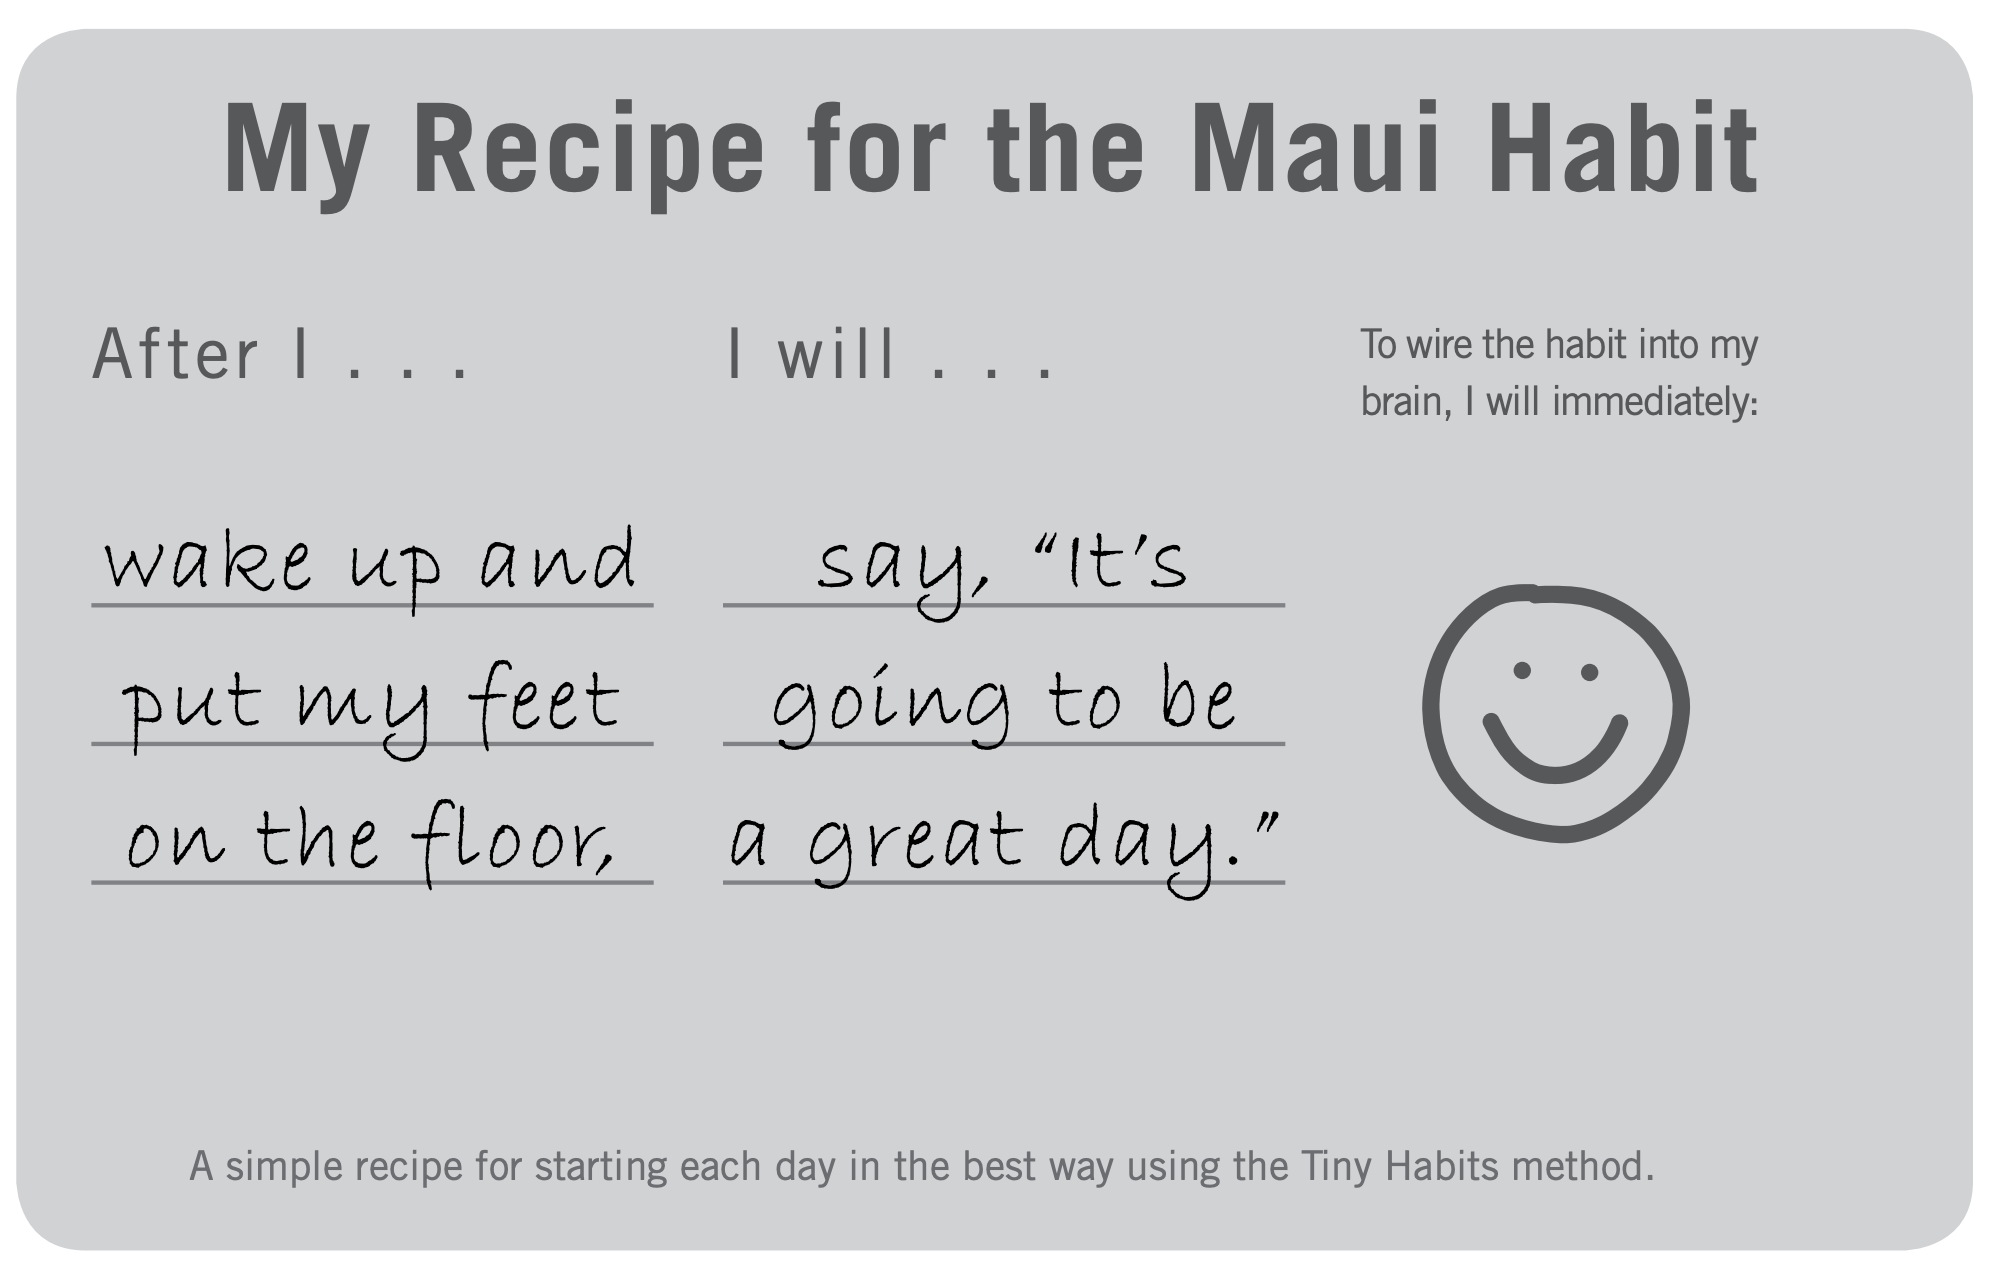 The recipe for the Maui Habit